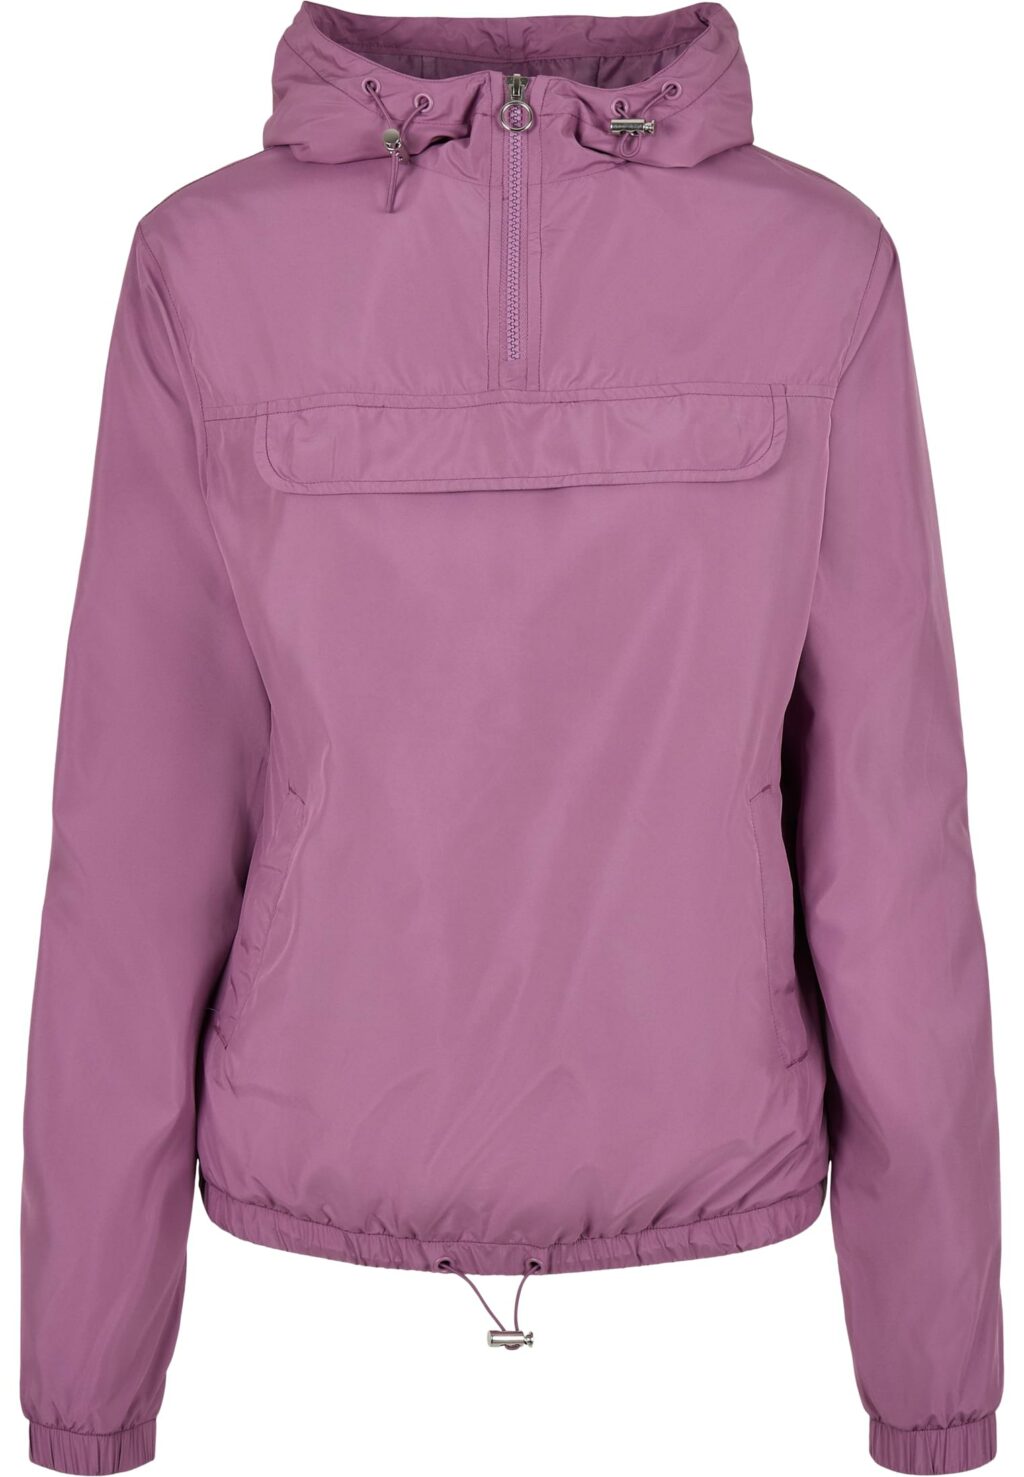 Urban Classics Ladies Basic Pull Over Jacket duskviolet TB2013